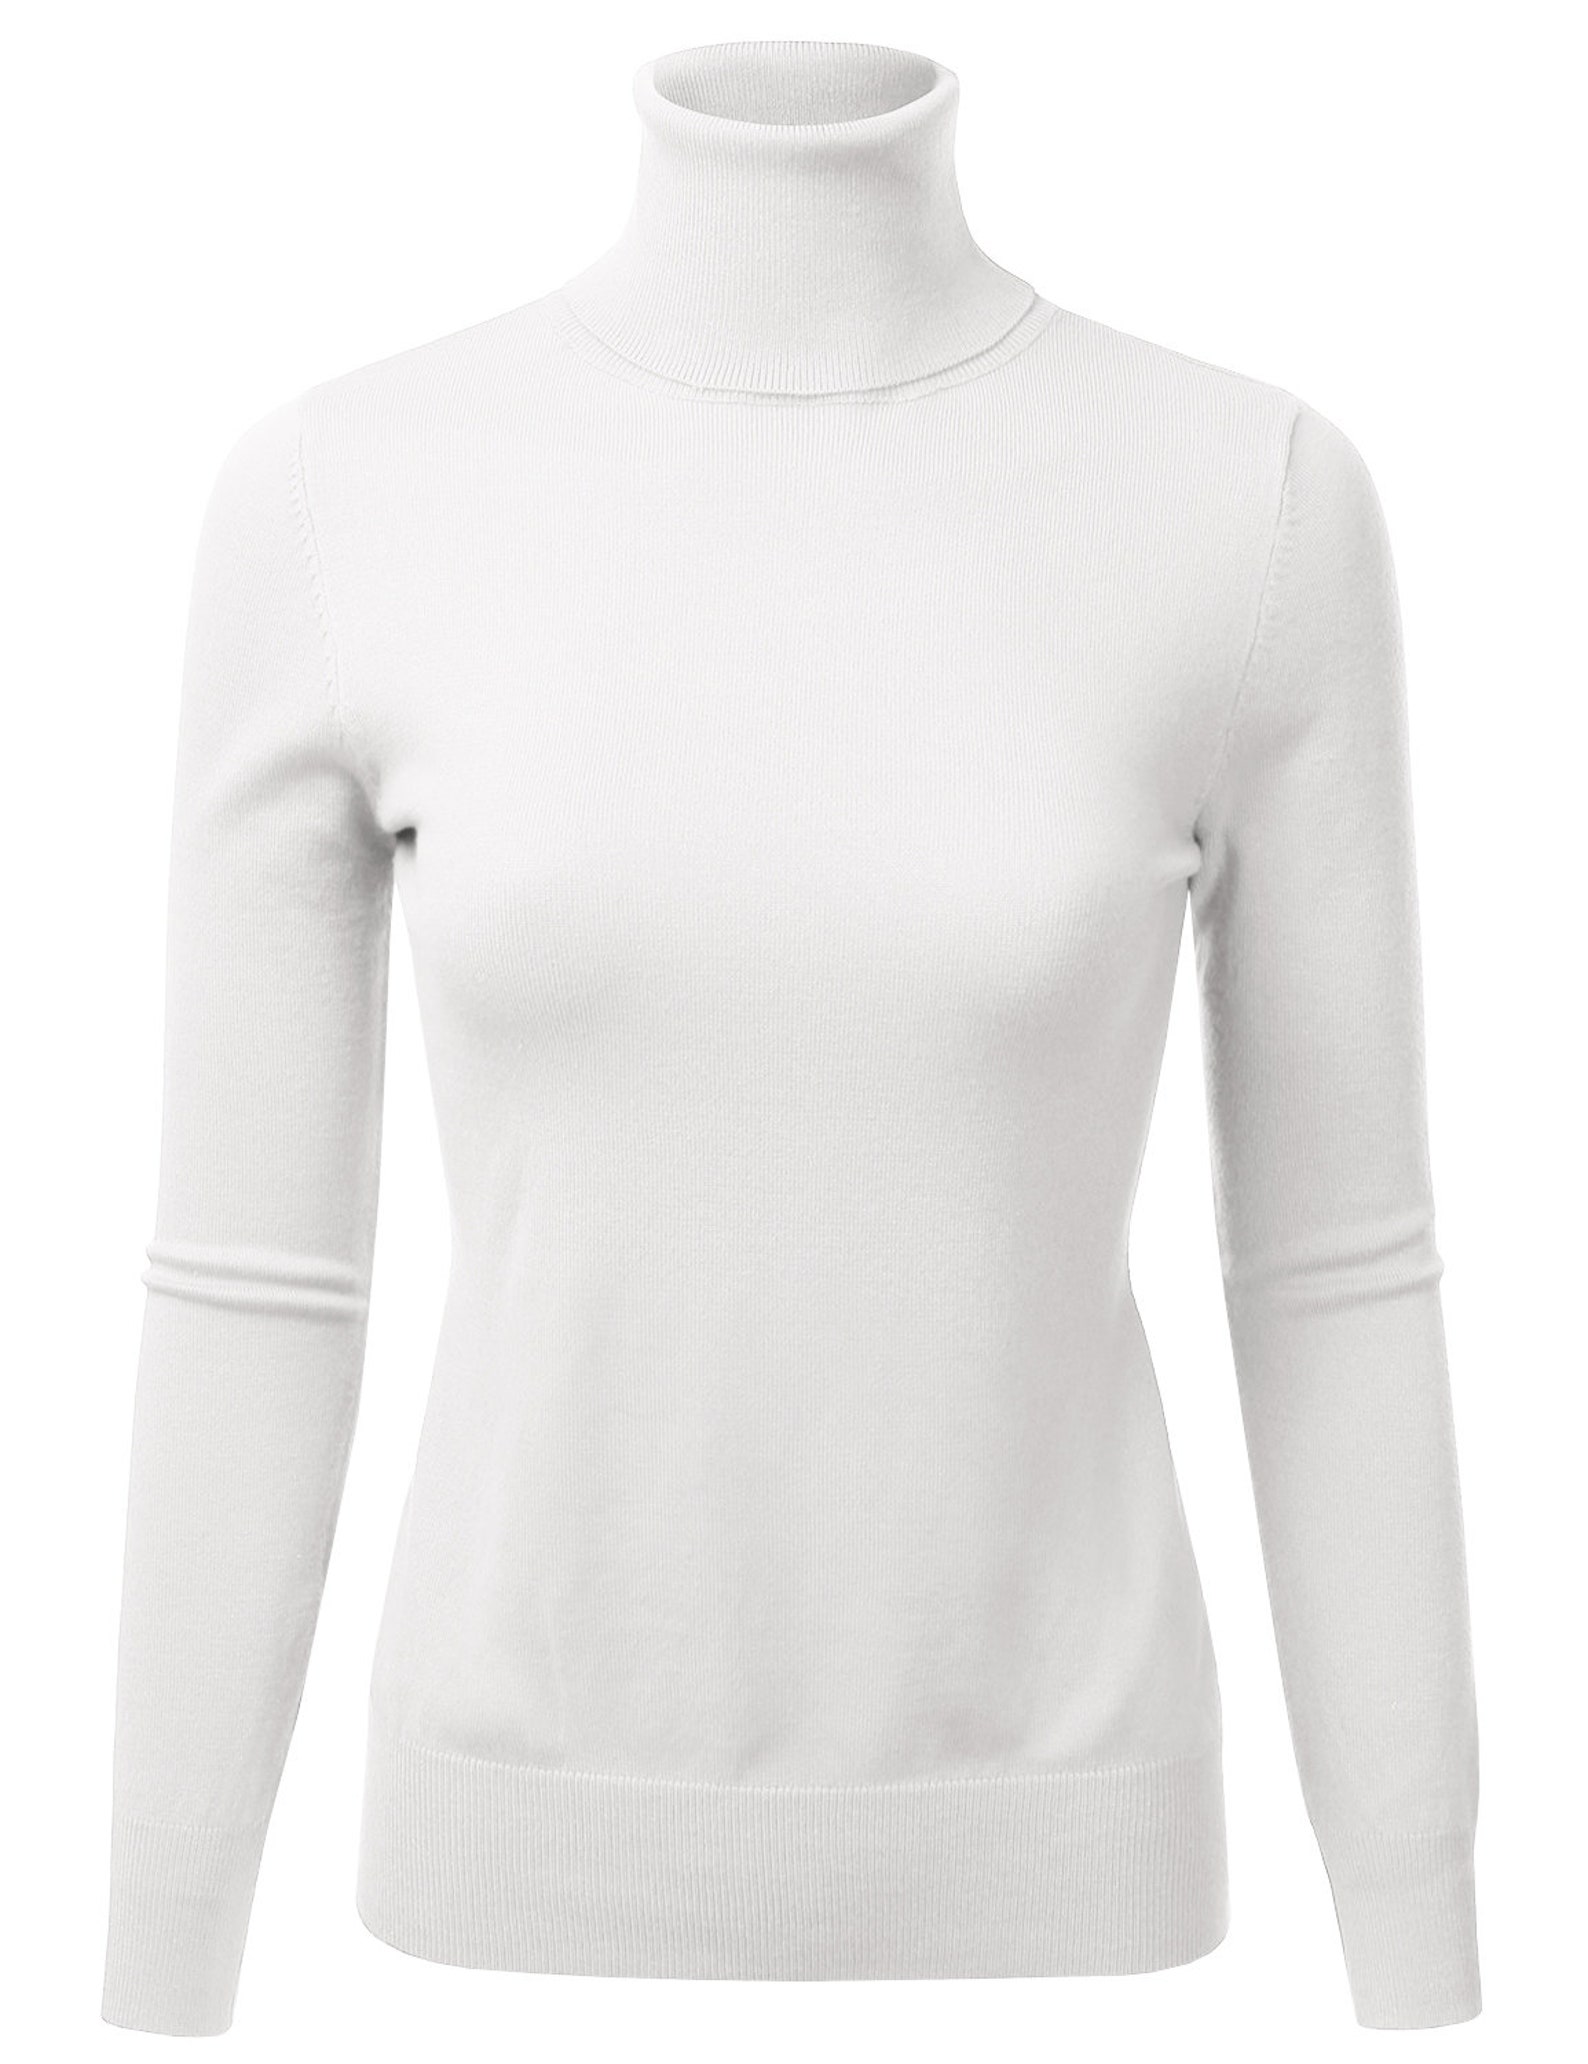 DANIBE Women's Long Sleeve Pullover Turtleneck Slim Fit - Etsy